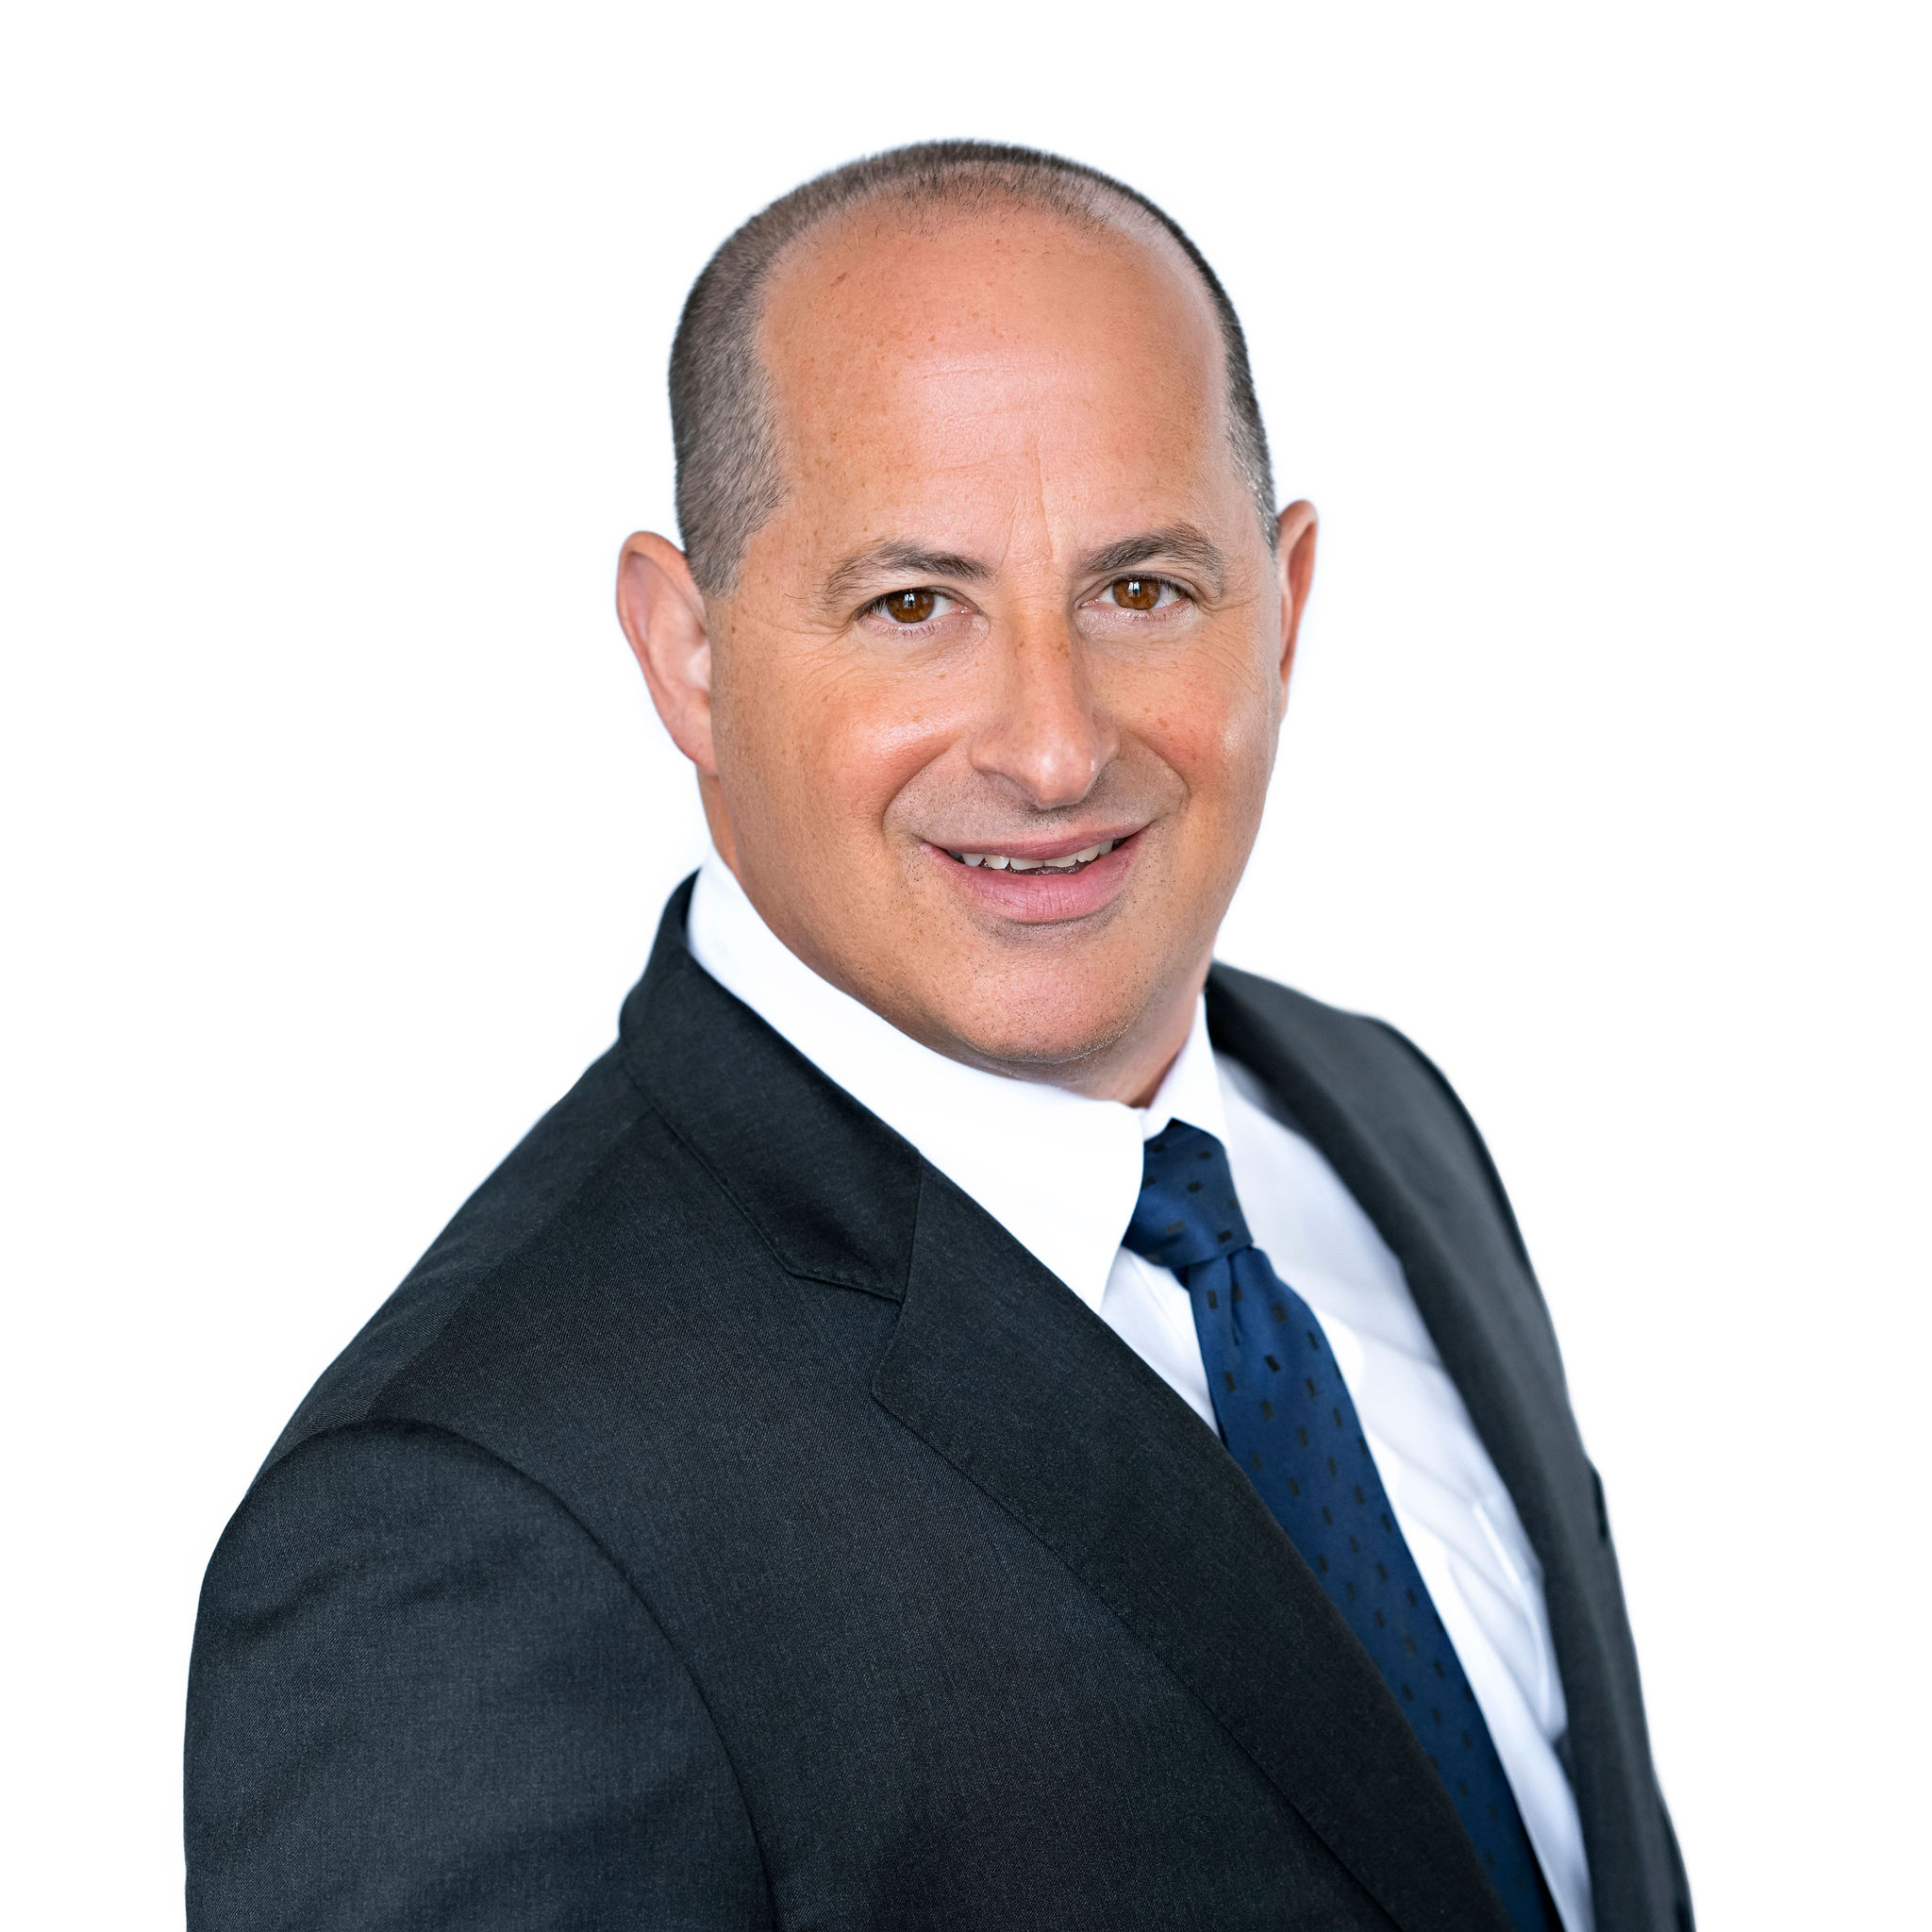 Head & shoulders image of Michael Schwartz, Senior Vice President, Corporate and Business Development